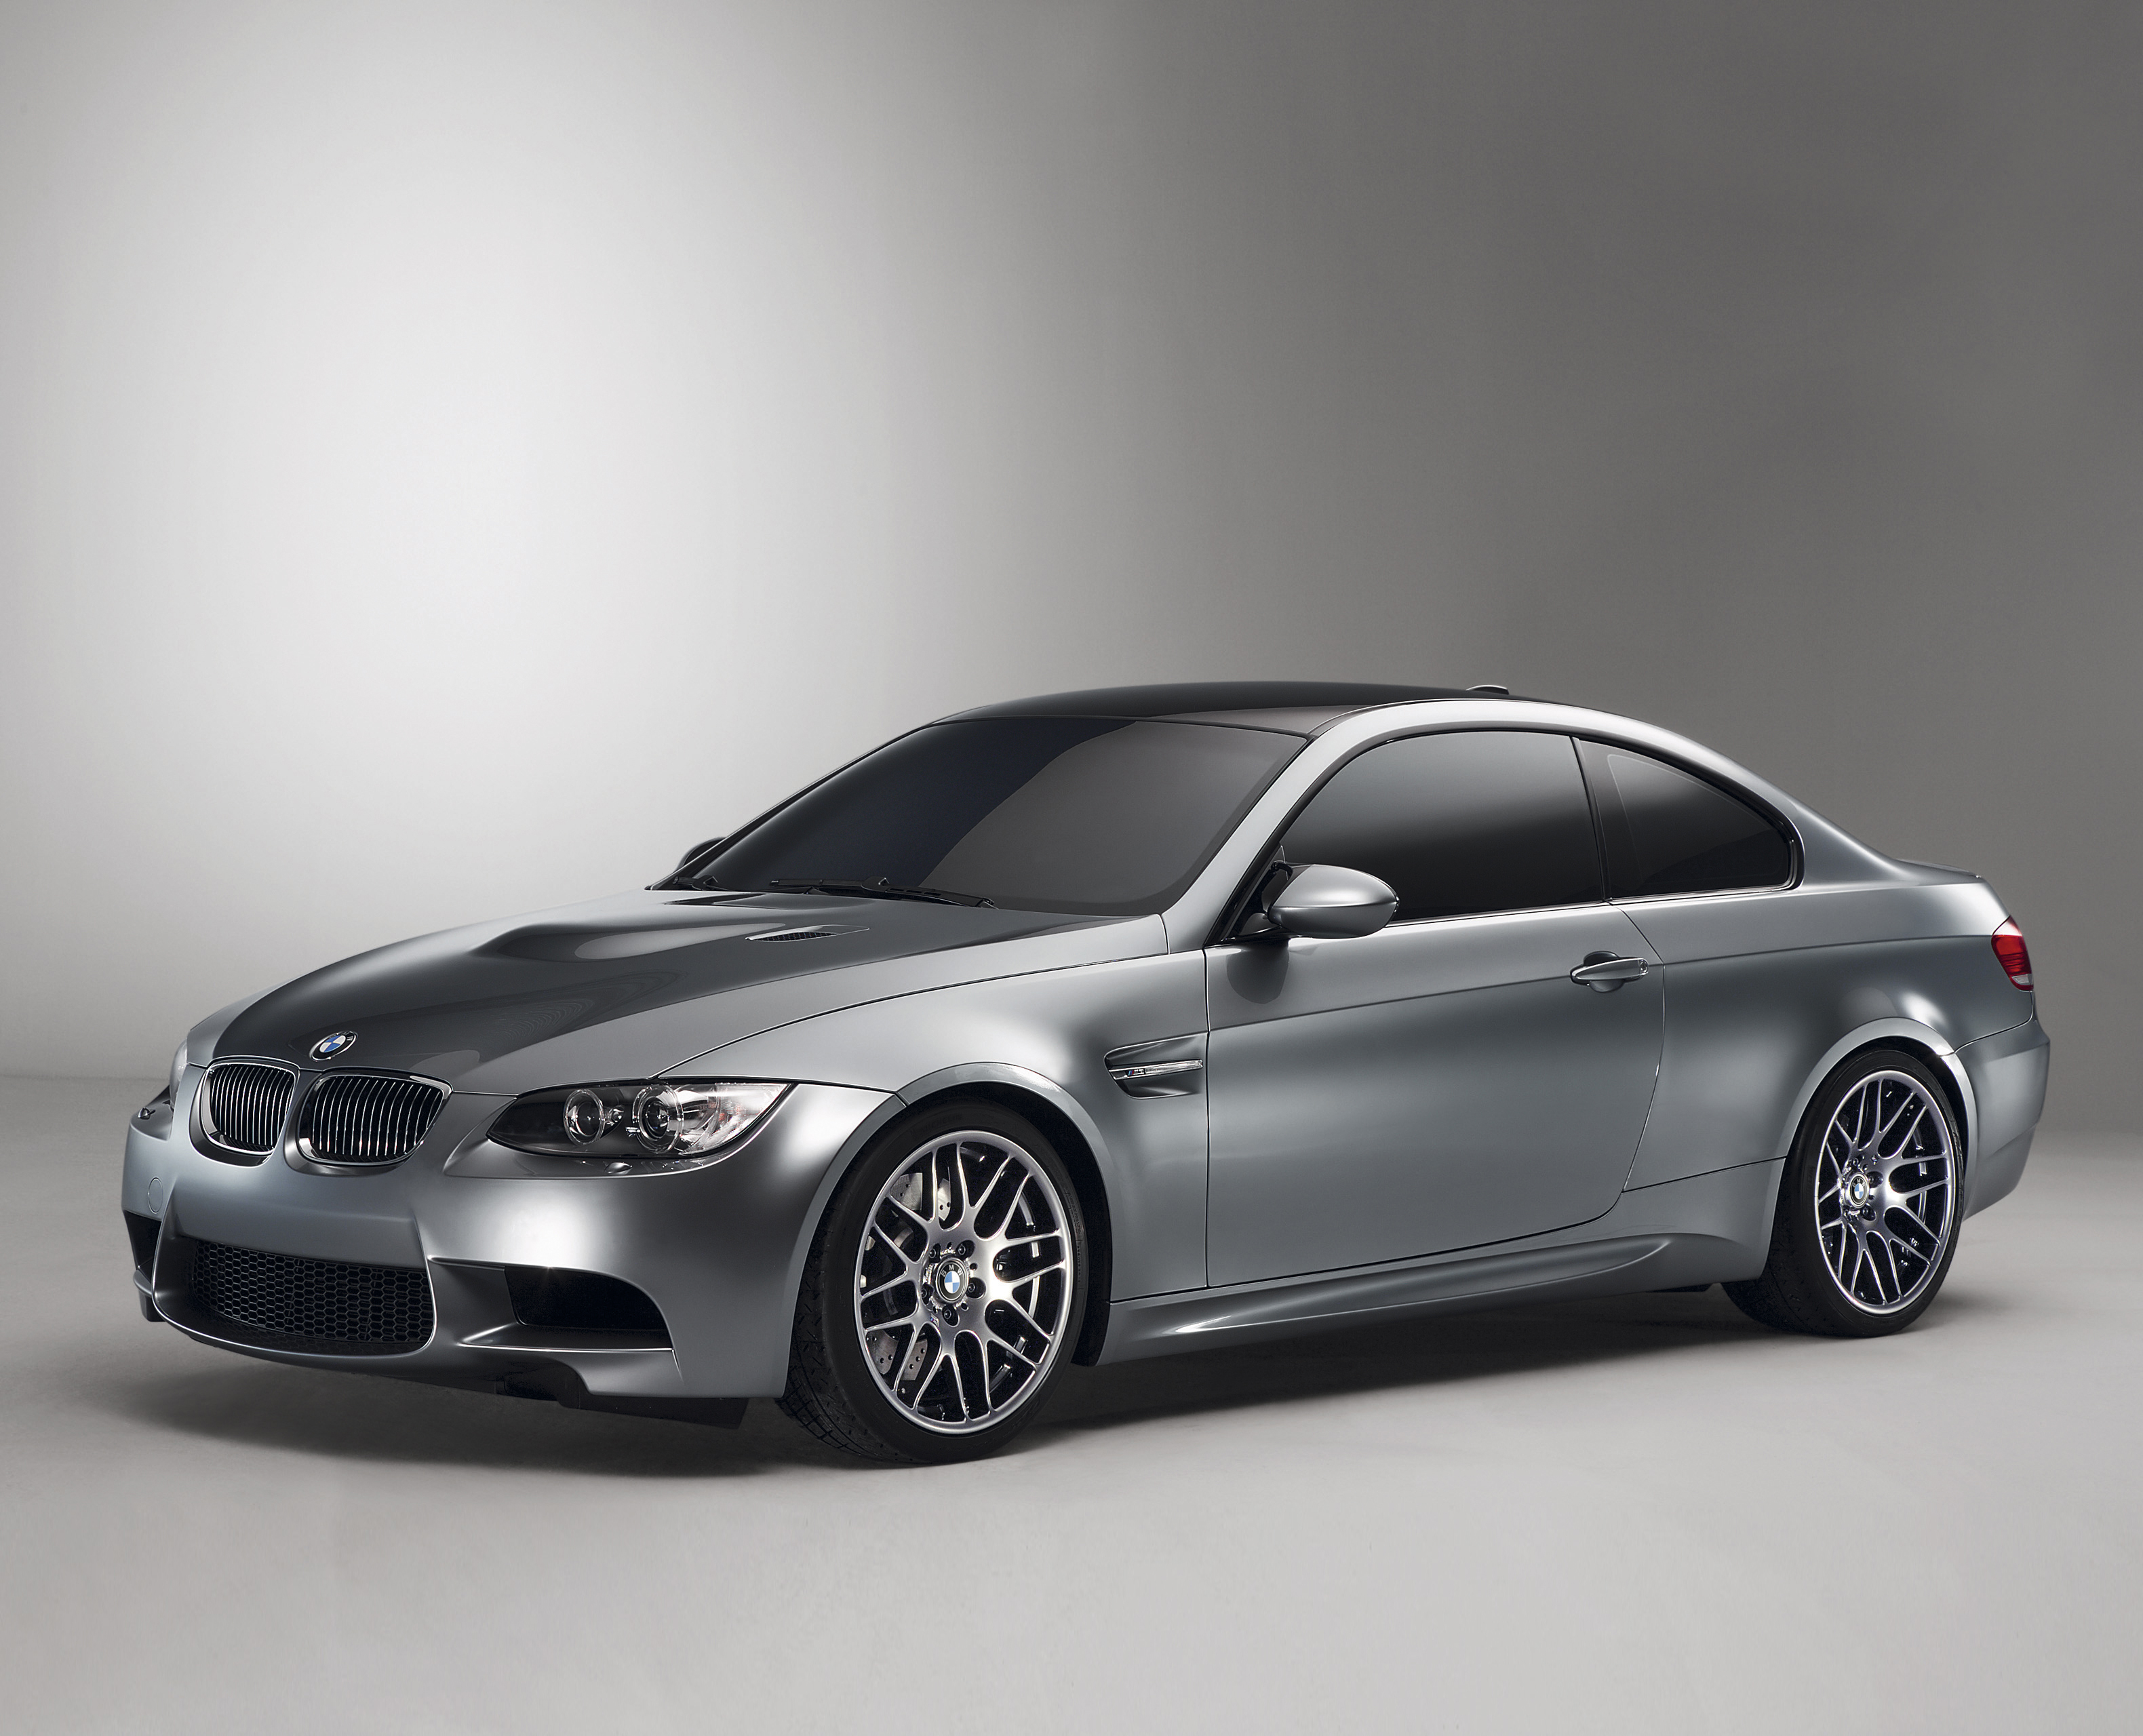 Машина серый металлик. BMW m3 серая. БМВ м3 серая. BMW m3 Coupe 2009. BMW m3 2010 Performance.